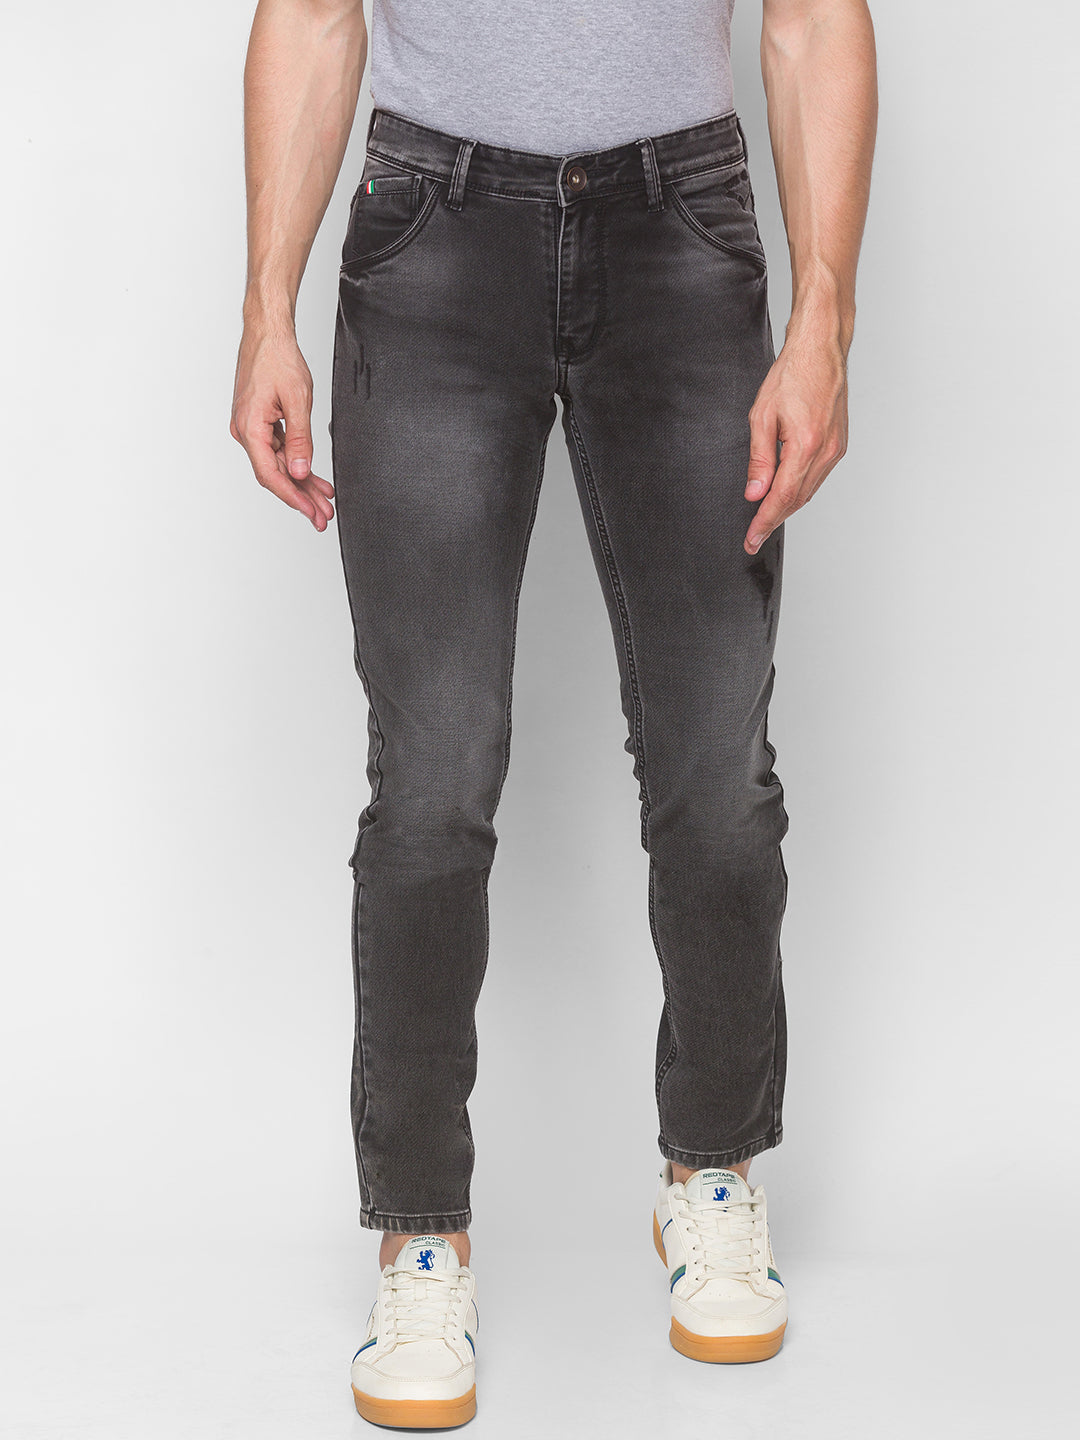 Carbon Black Narrow Bottom Jeans